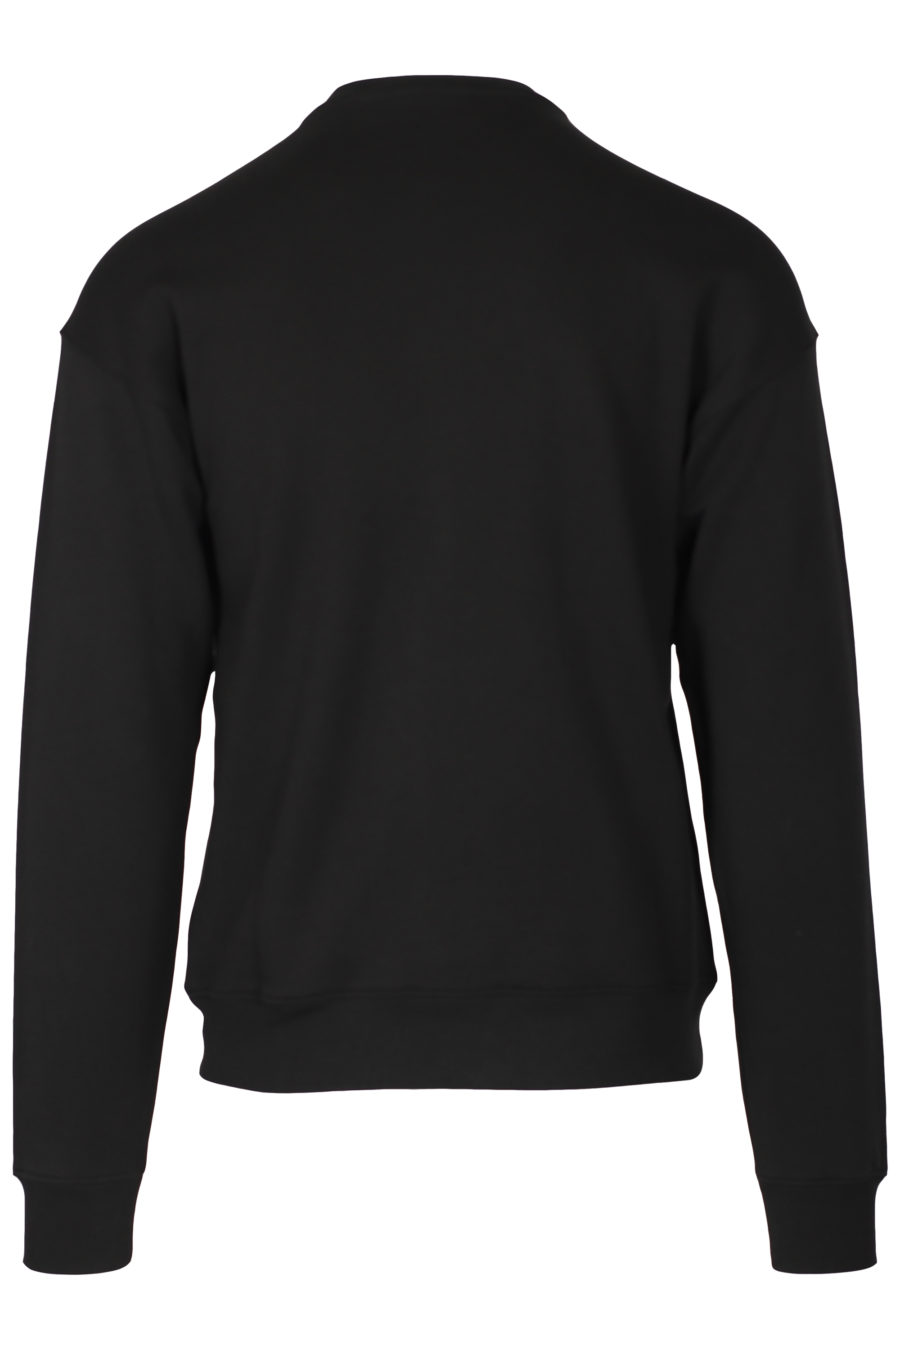 Logo du sweat noir "Couture Milano" - IMG 2579